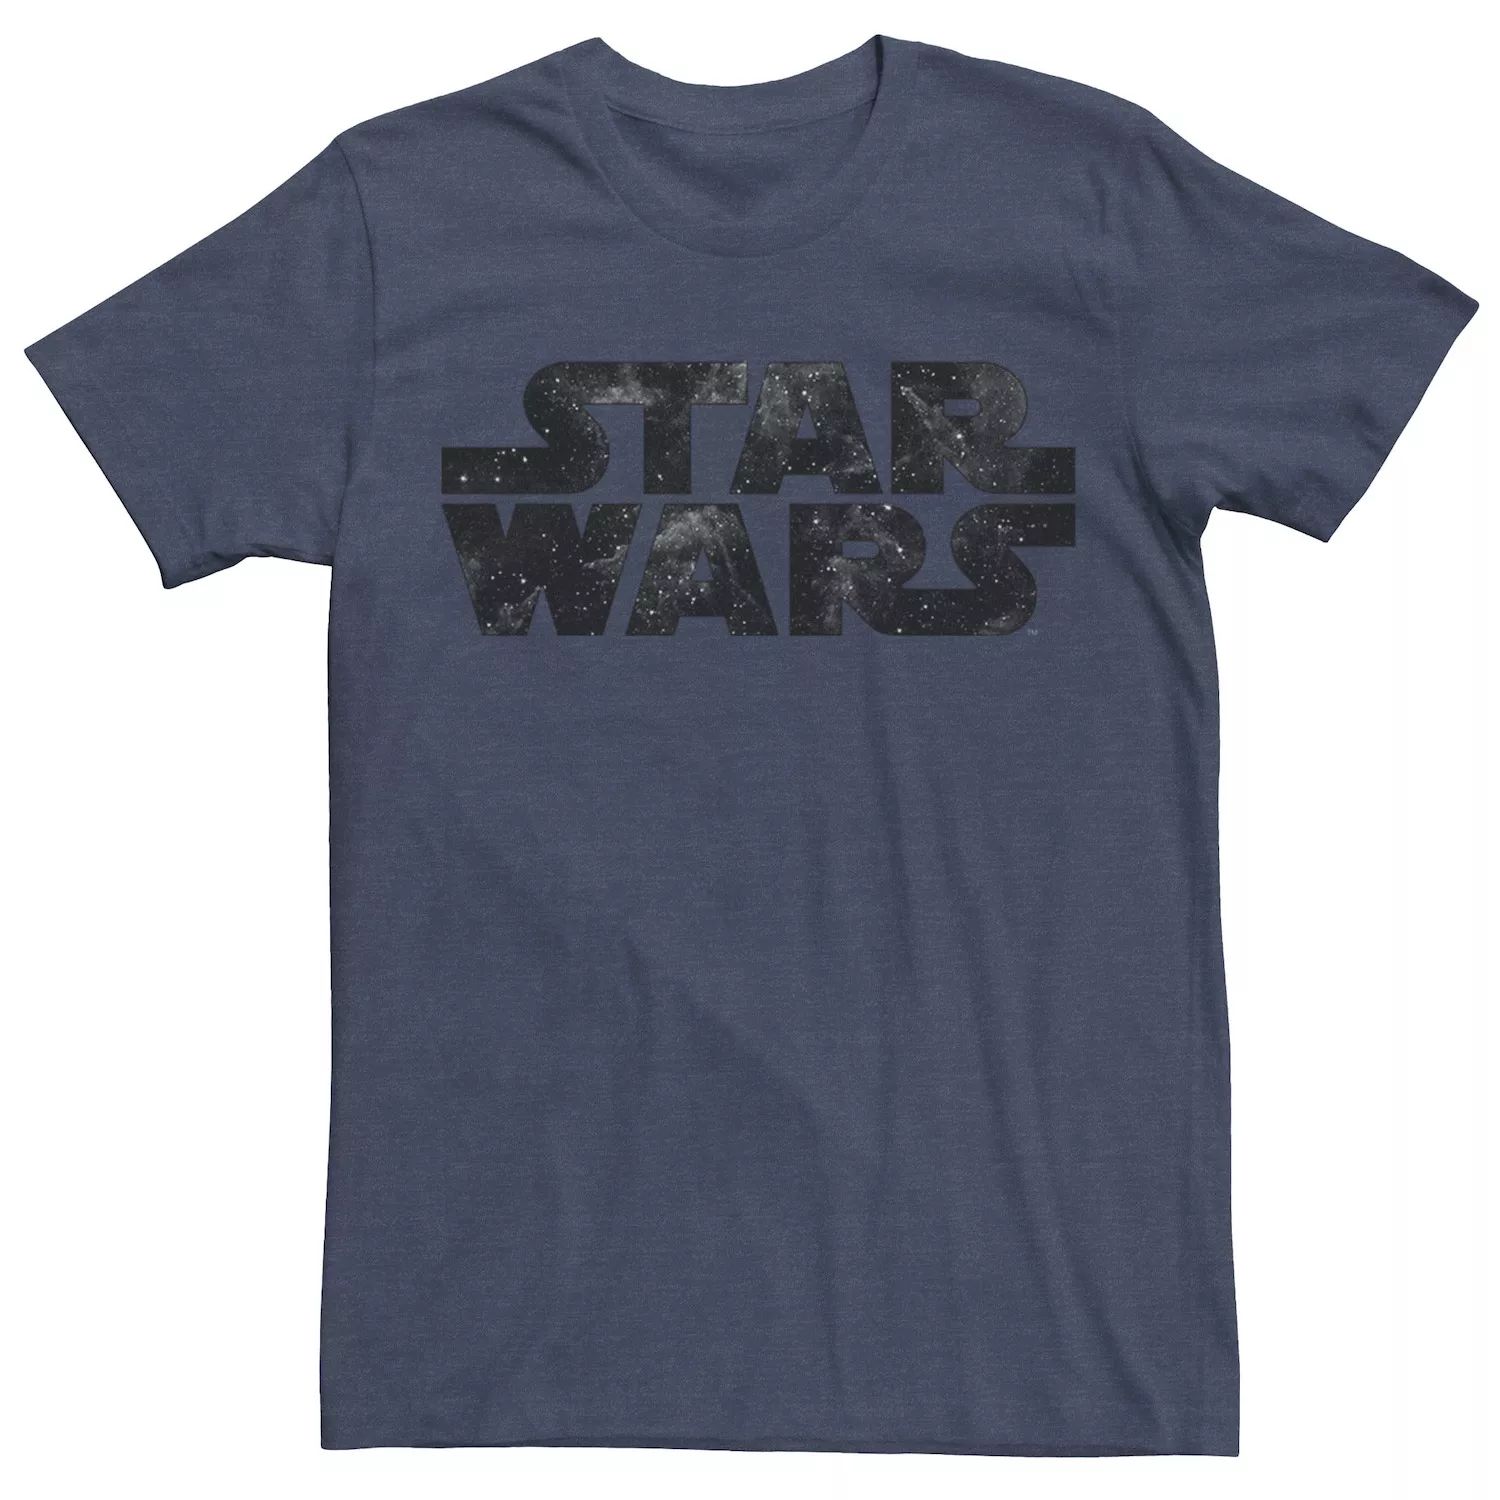 Мужская футболка с логотипом Starfield и графикой Star Wars